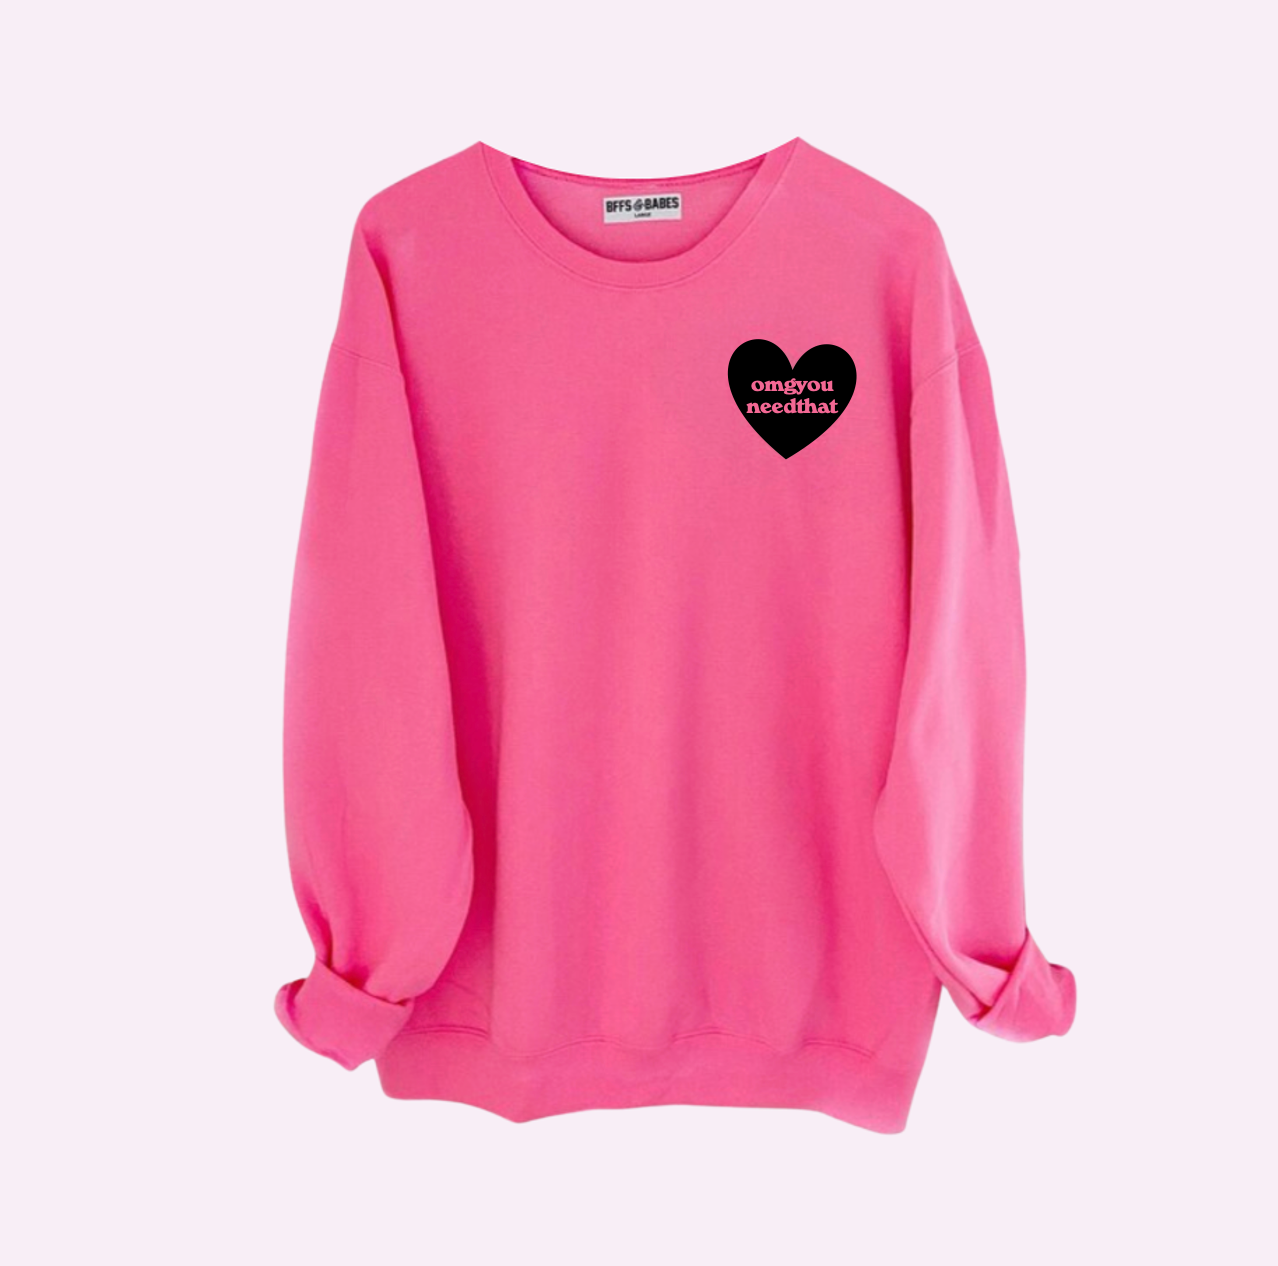 OMGYouNeedThat SWEATSHIRT ♡ heart sweatshirt in hot pink/black